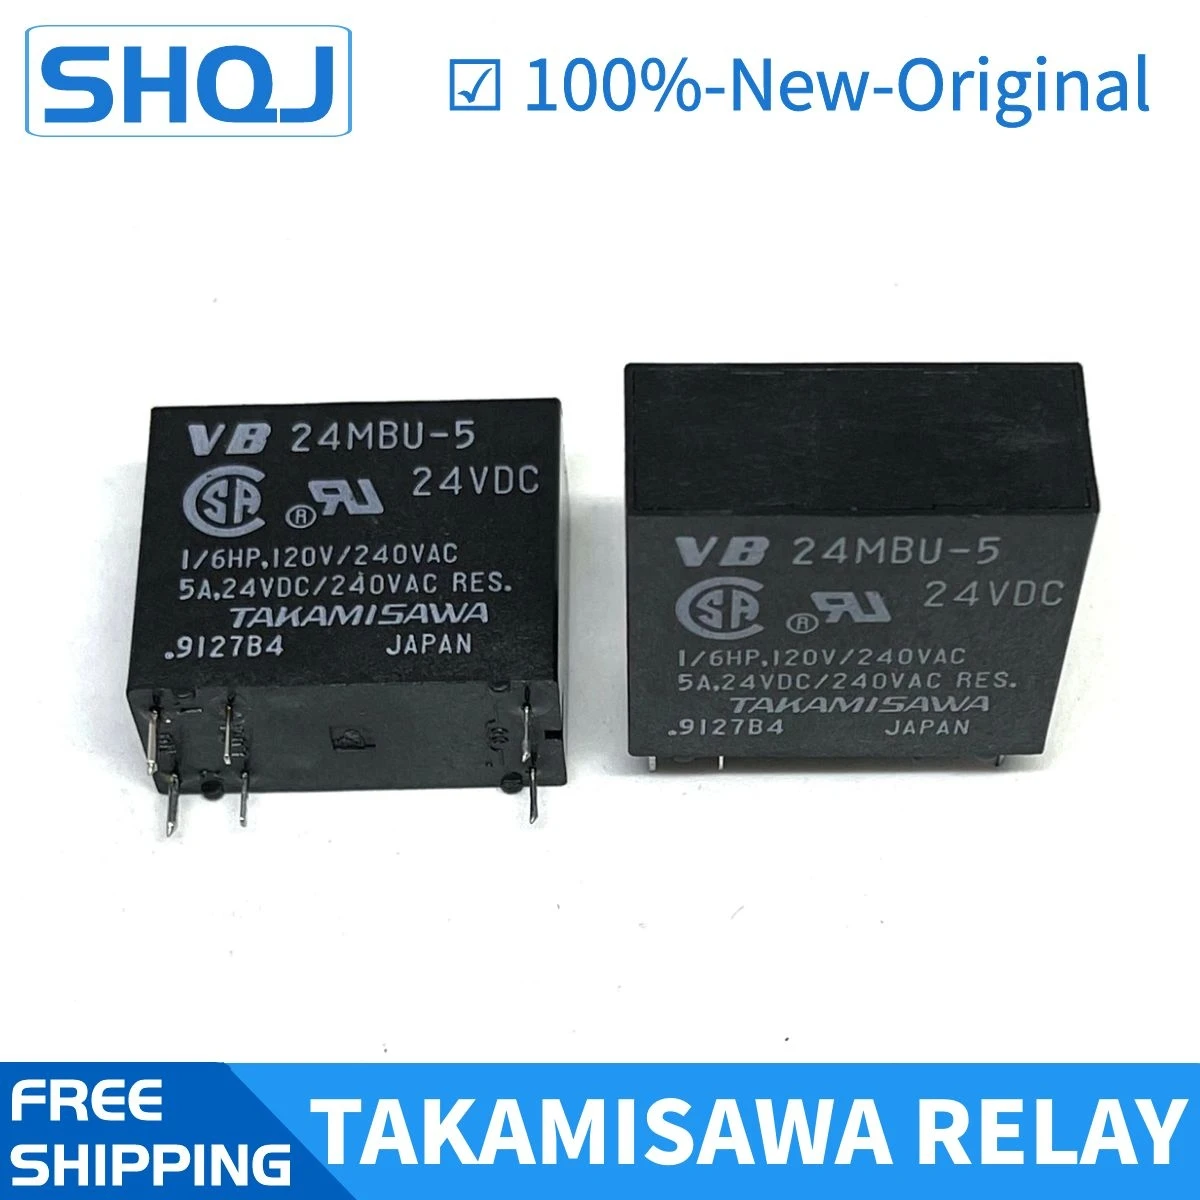 1 PC SY-24-K TAKAMISAWA Relays Relay SPDT 1xU 24VDC 2A NEW #BP